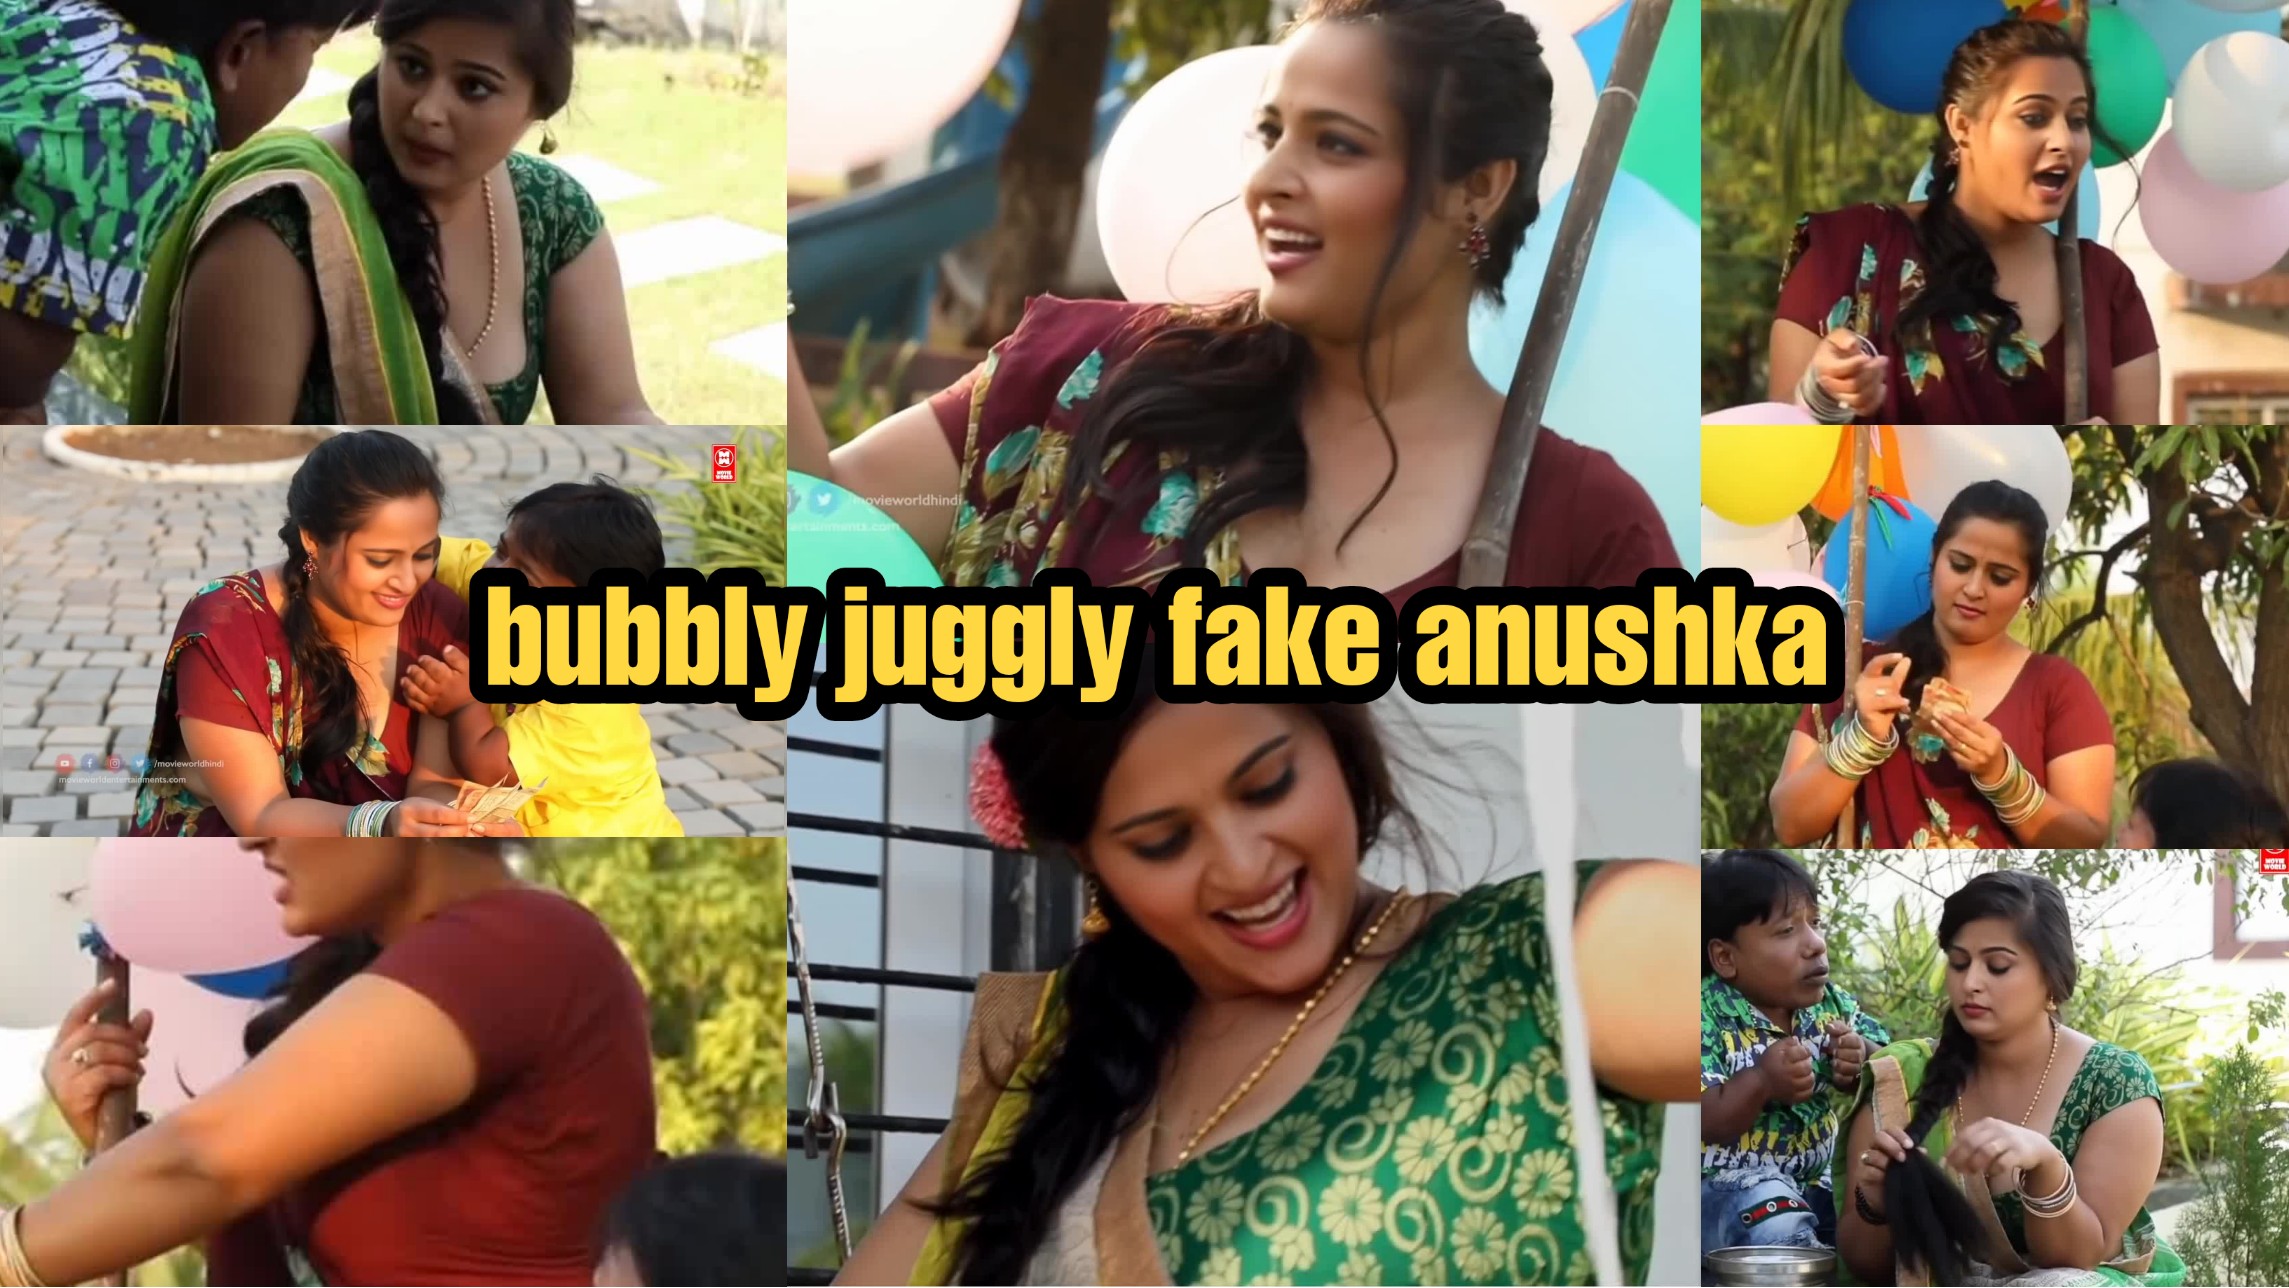 anushka shetty (fake) bubbly jiggly aunty sedcuing lot of men